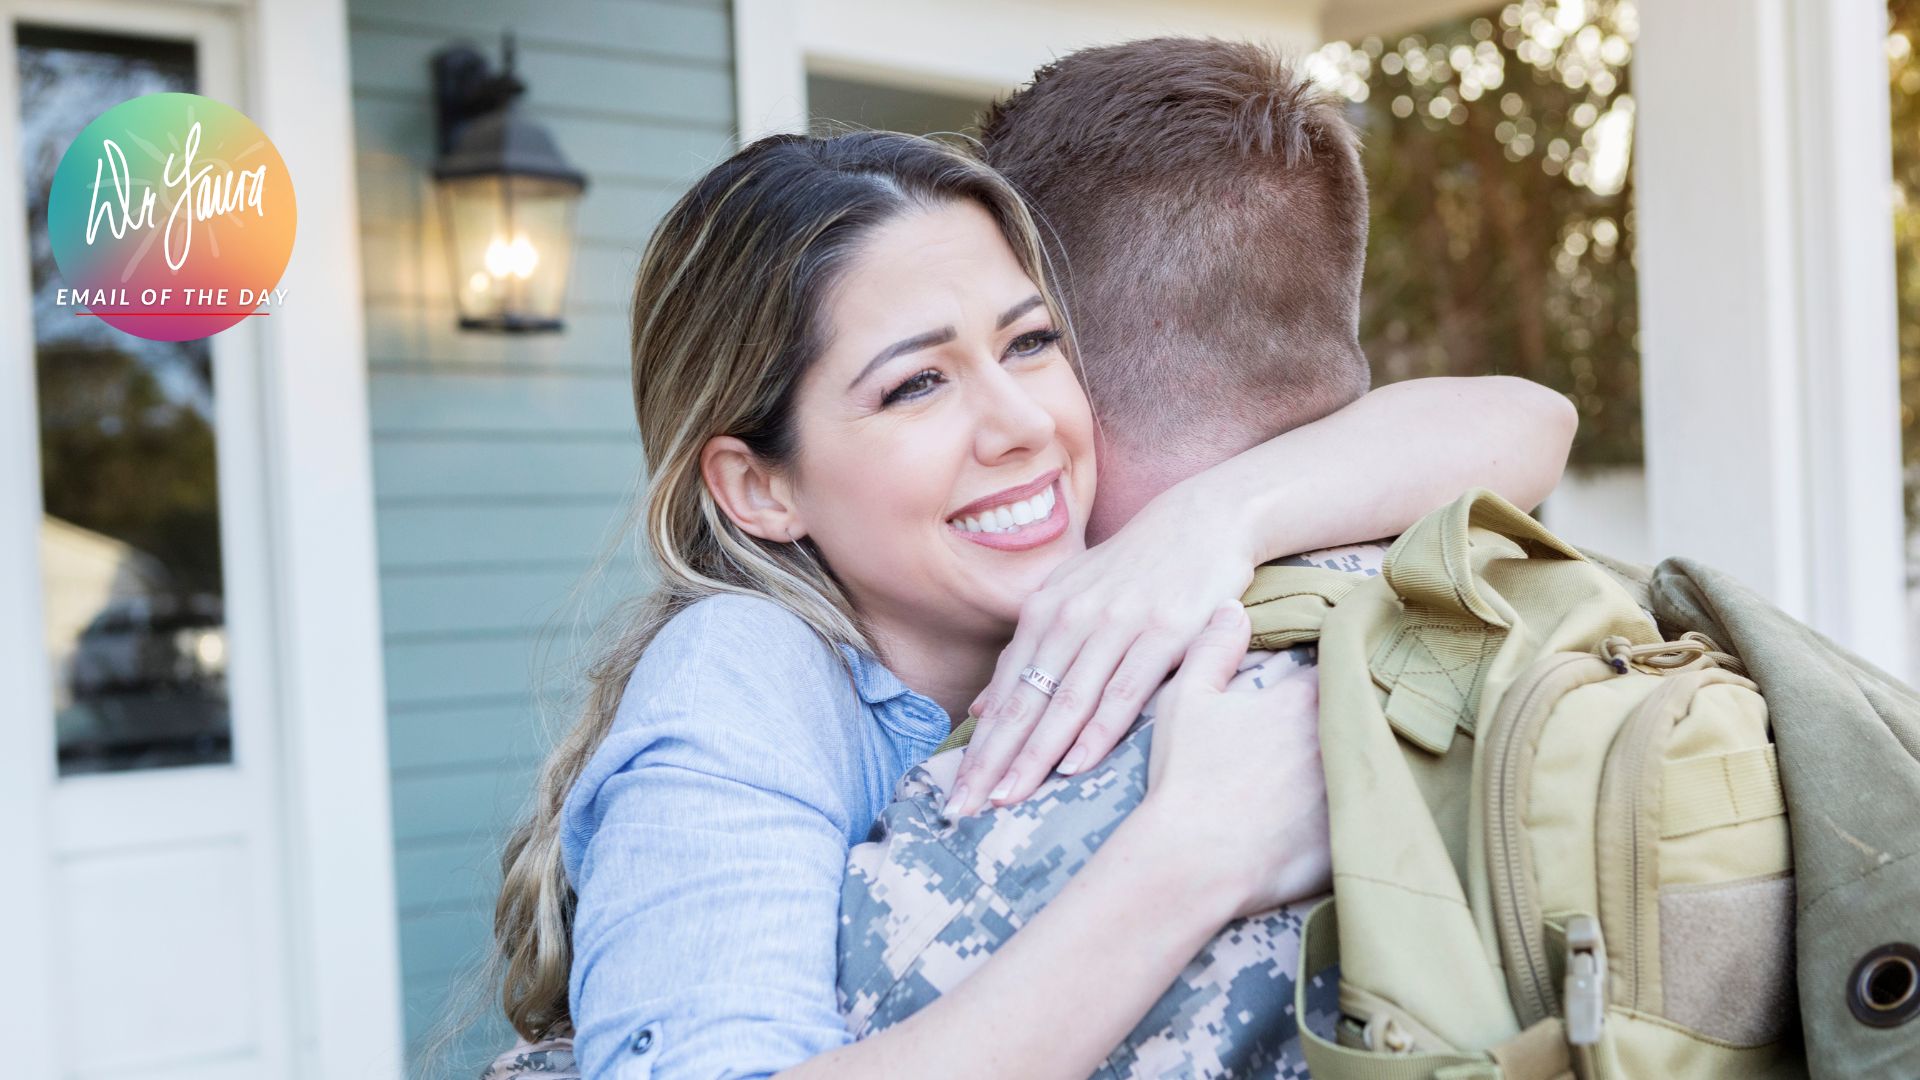 Woman in blue shirt hugs man in military uniform